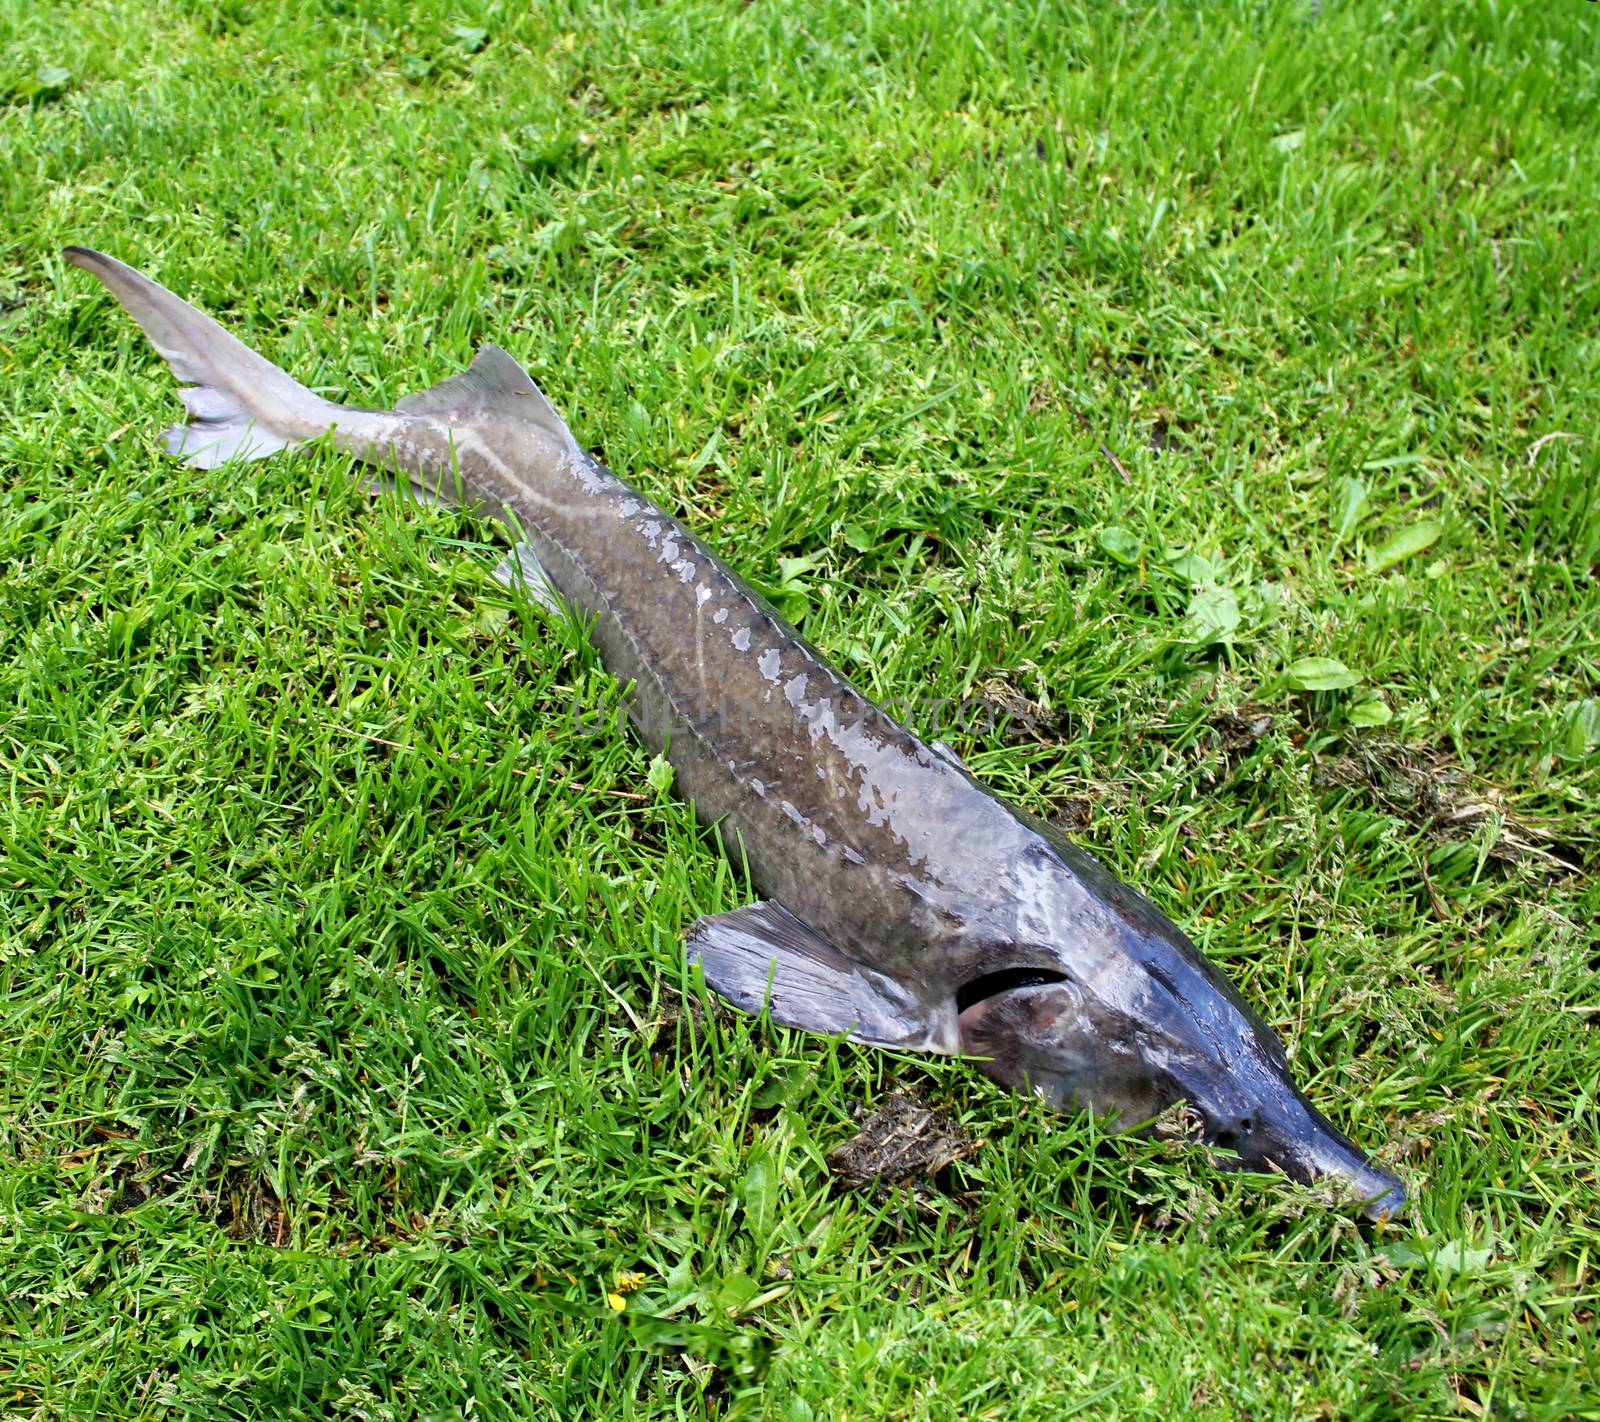 sturgeon lying on the grass